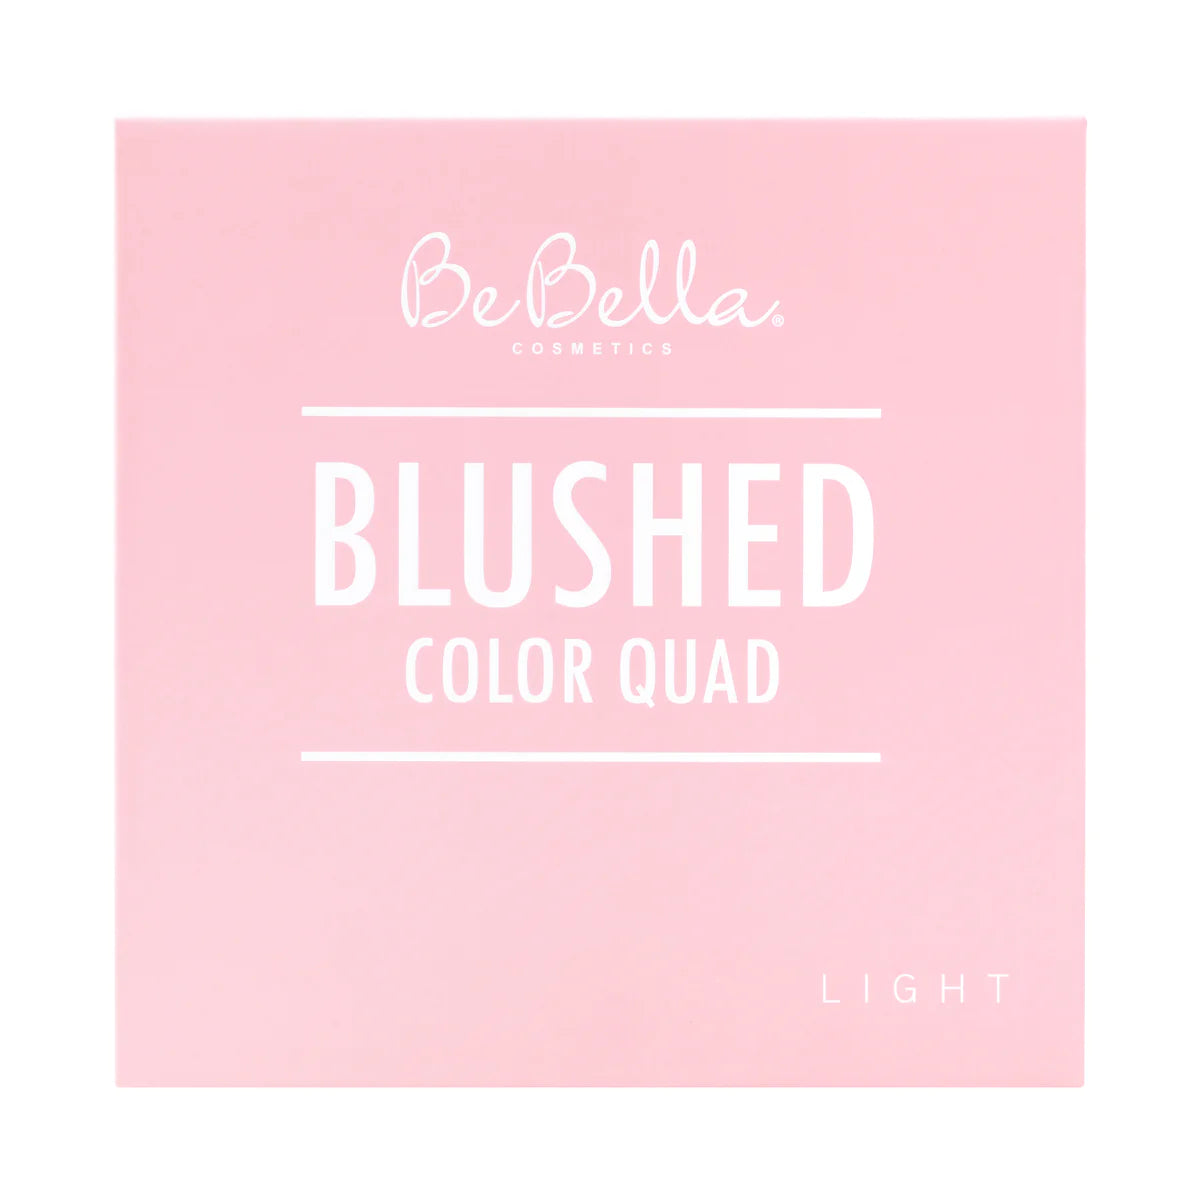 Light Blush Colored Quad